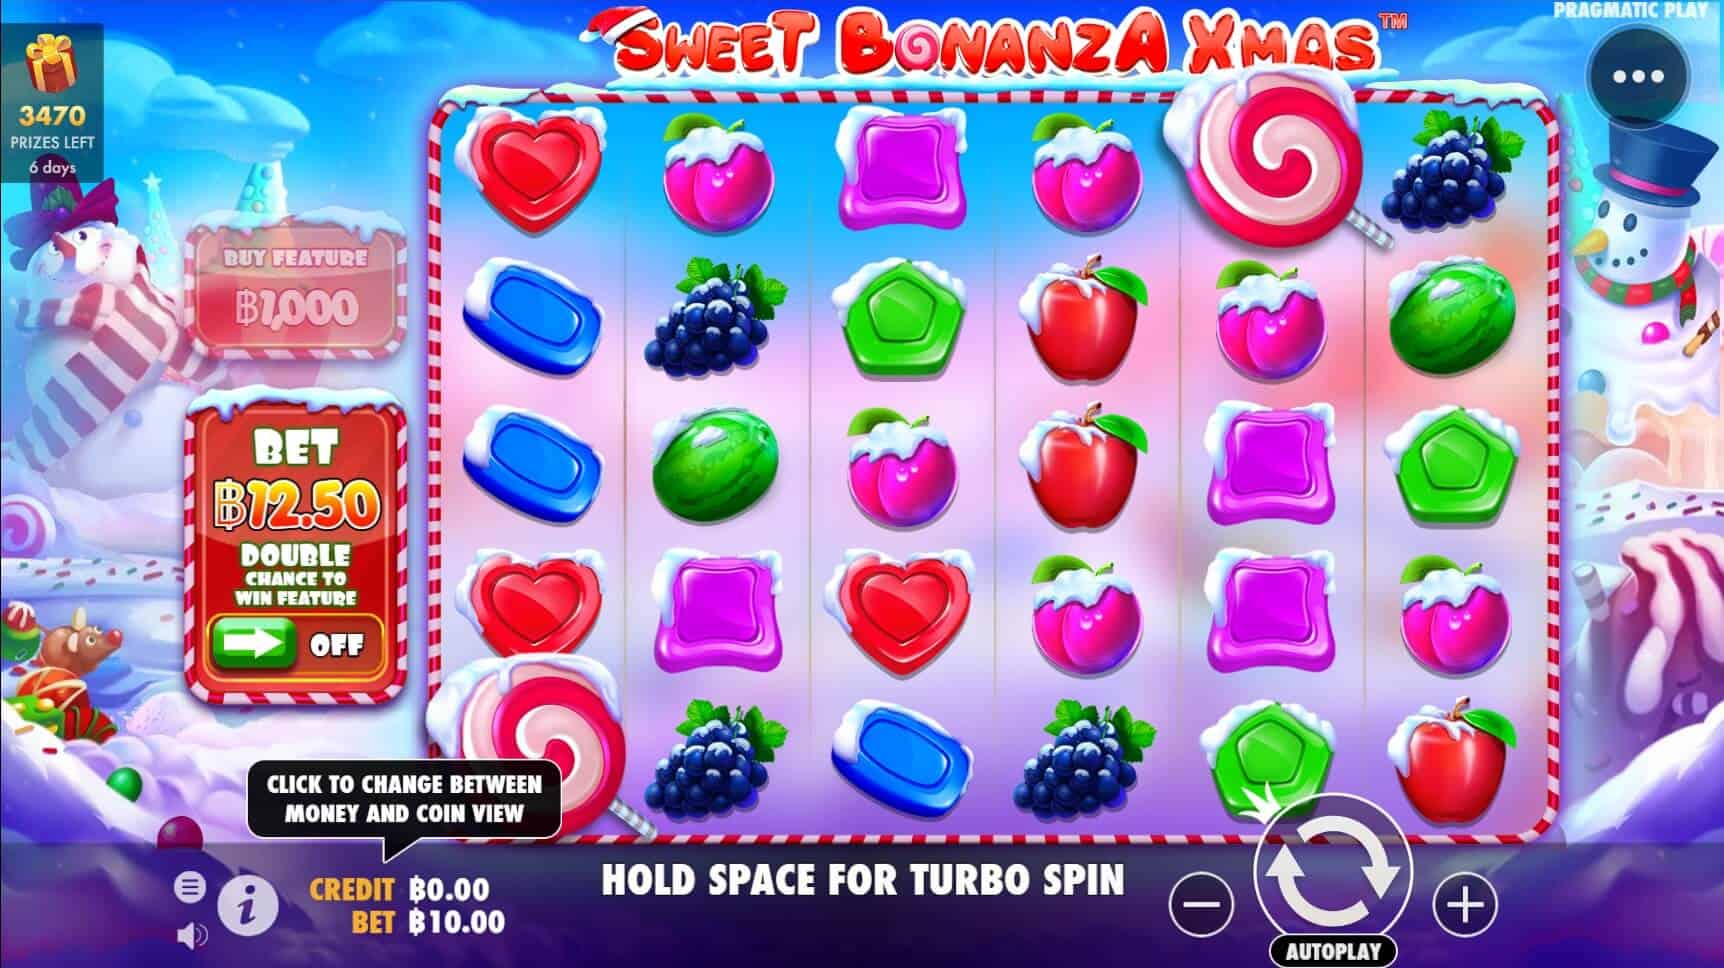 Sweet Bonanza Xmas เกมสล็อต เว็บตรง จากค่าย Pragmatic Play joker123th